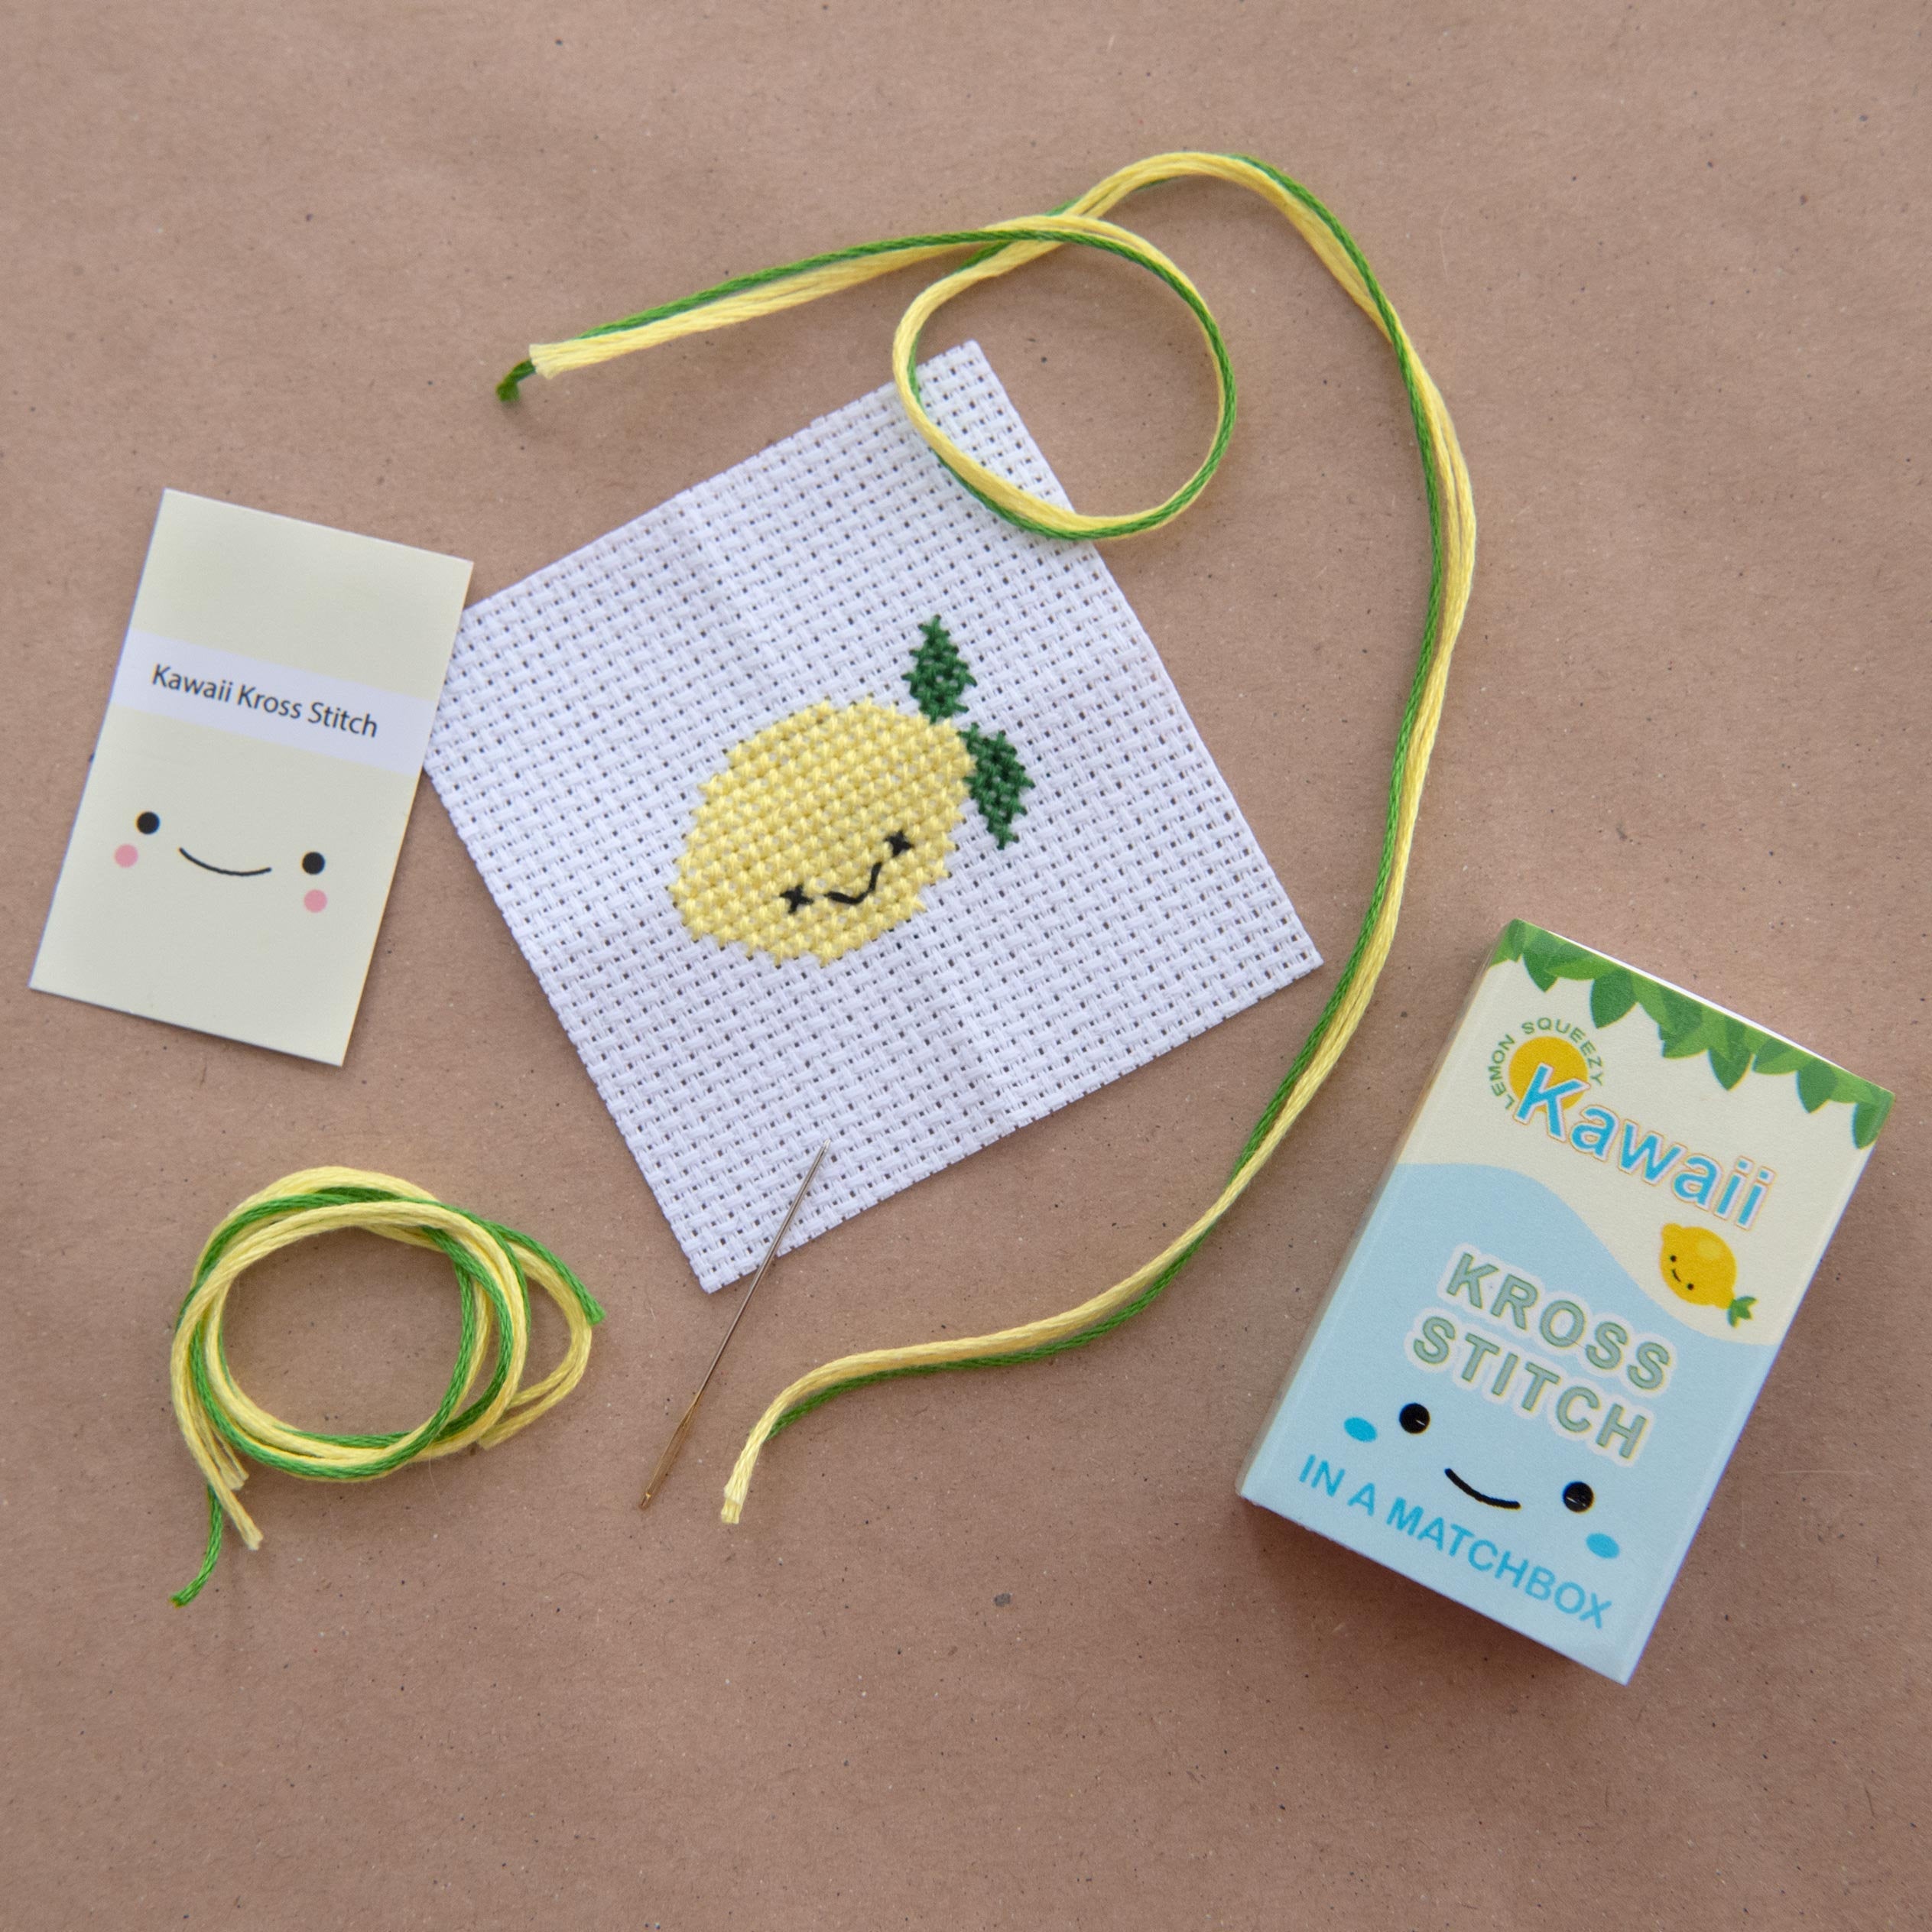 Mini Cross Stitch Kit With Kawaii Lemon In A Matchbox